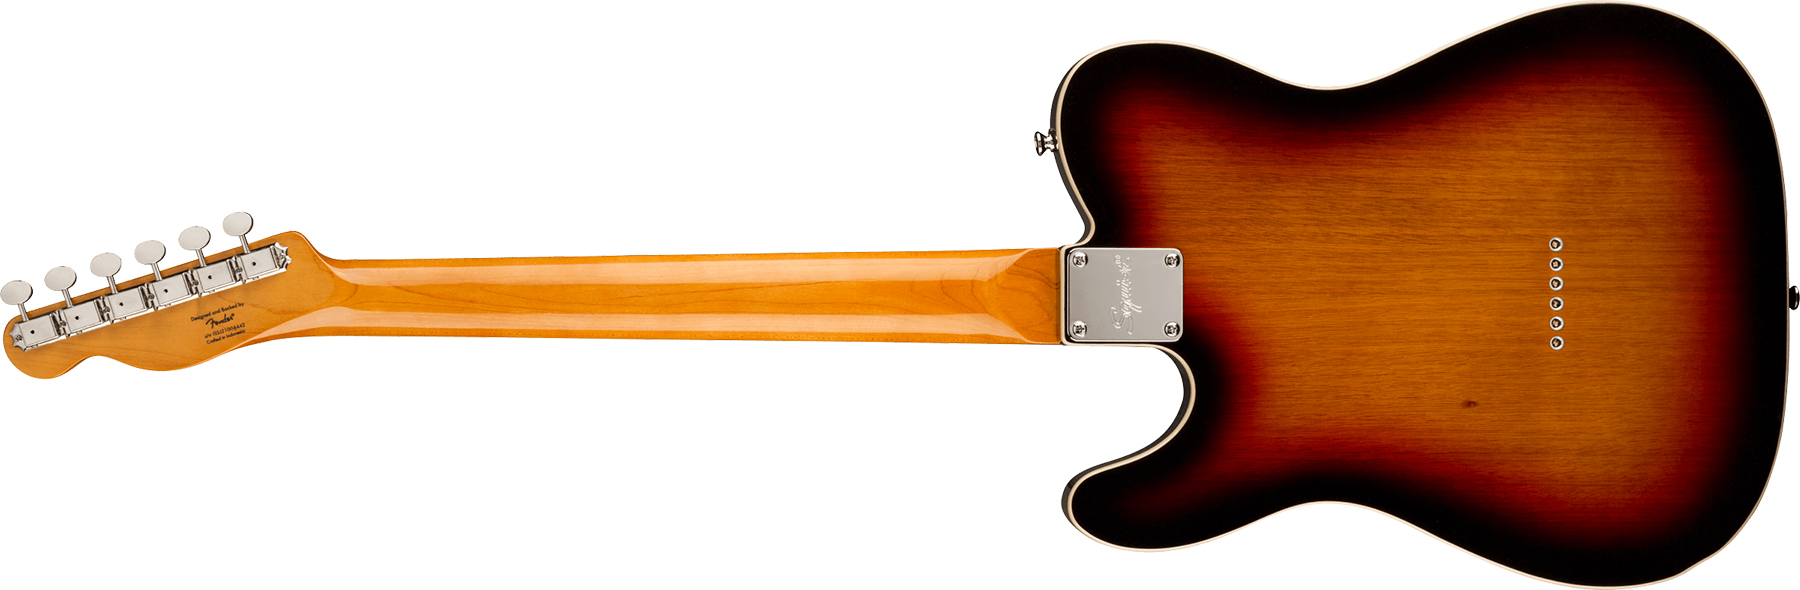 Squier Esquire Tele '60s Custom Classic Vibe Fsr Ltd Lau - 3 Color Sunburst - Televorm elektrische gitaar - Variation 1